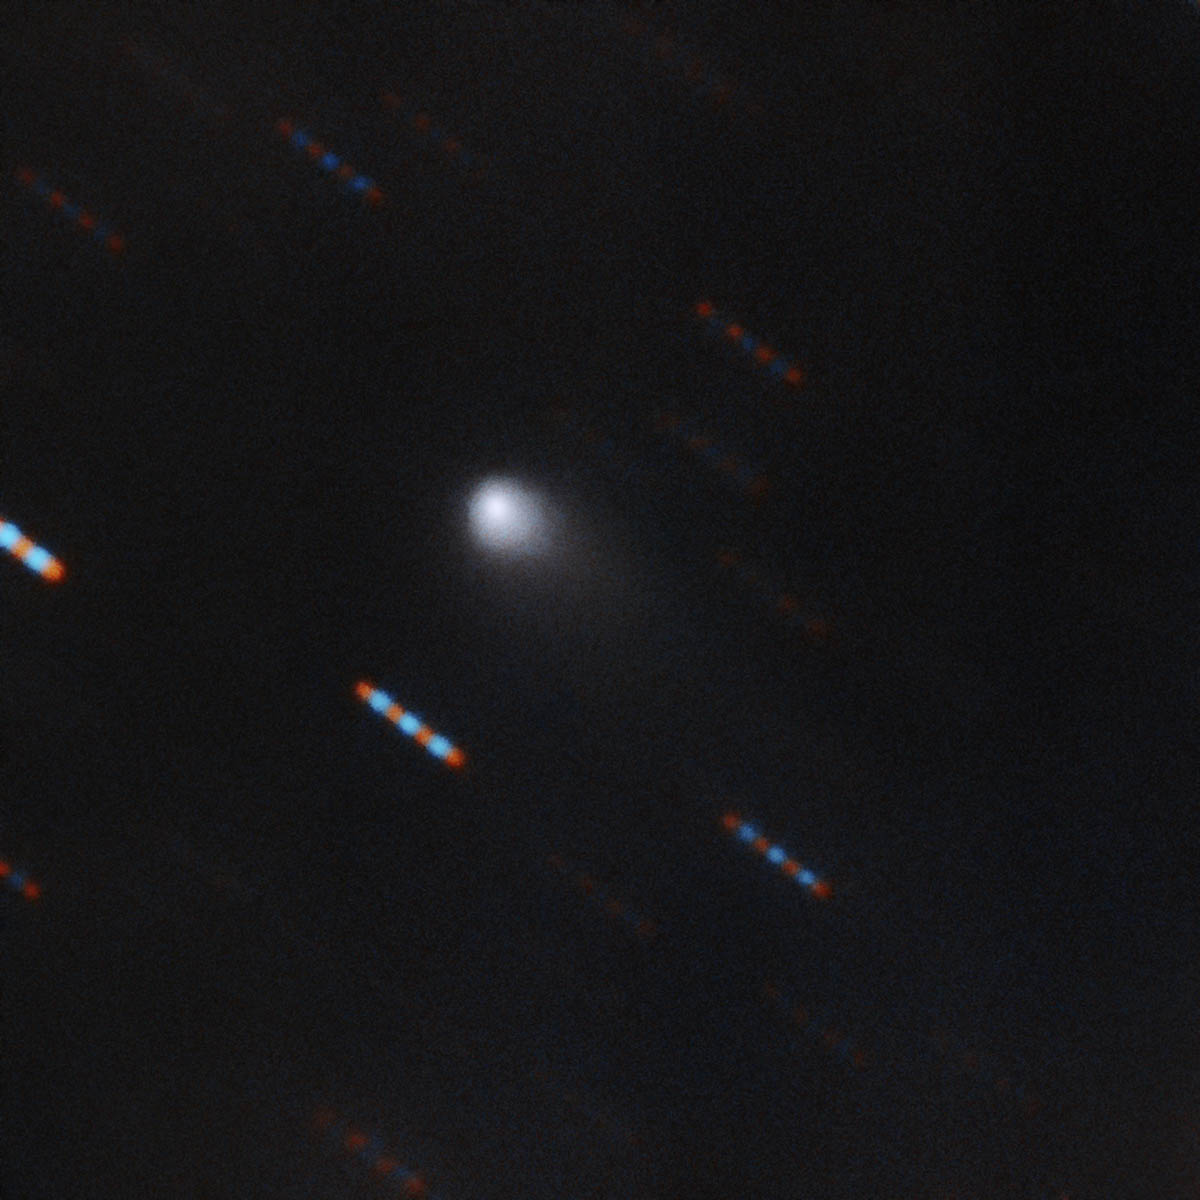 fuzzy image od interstellar comet